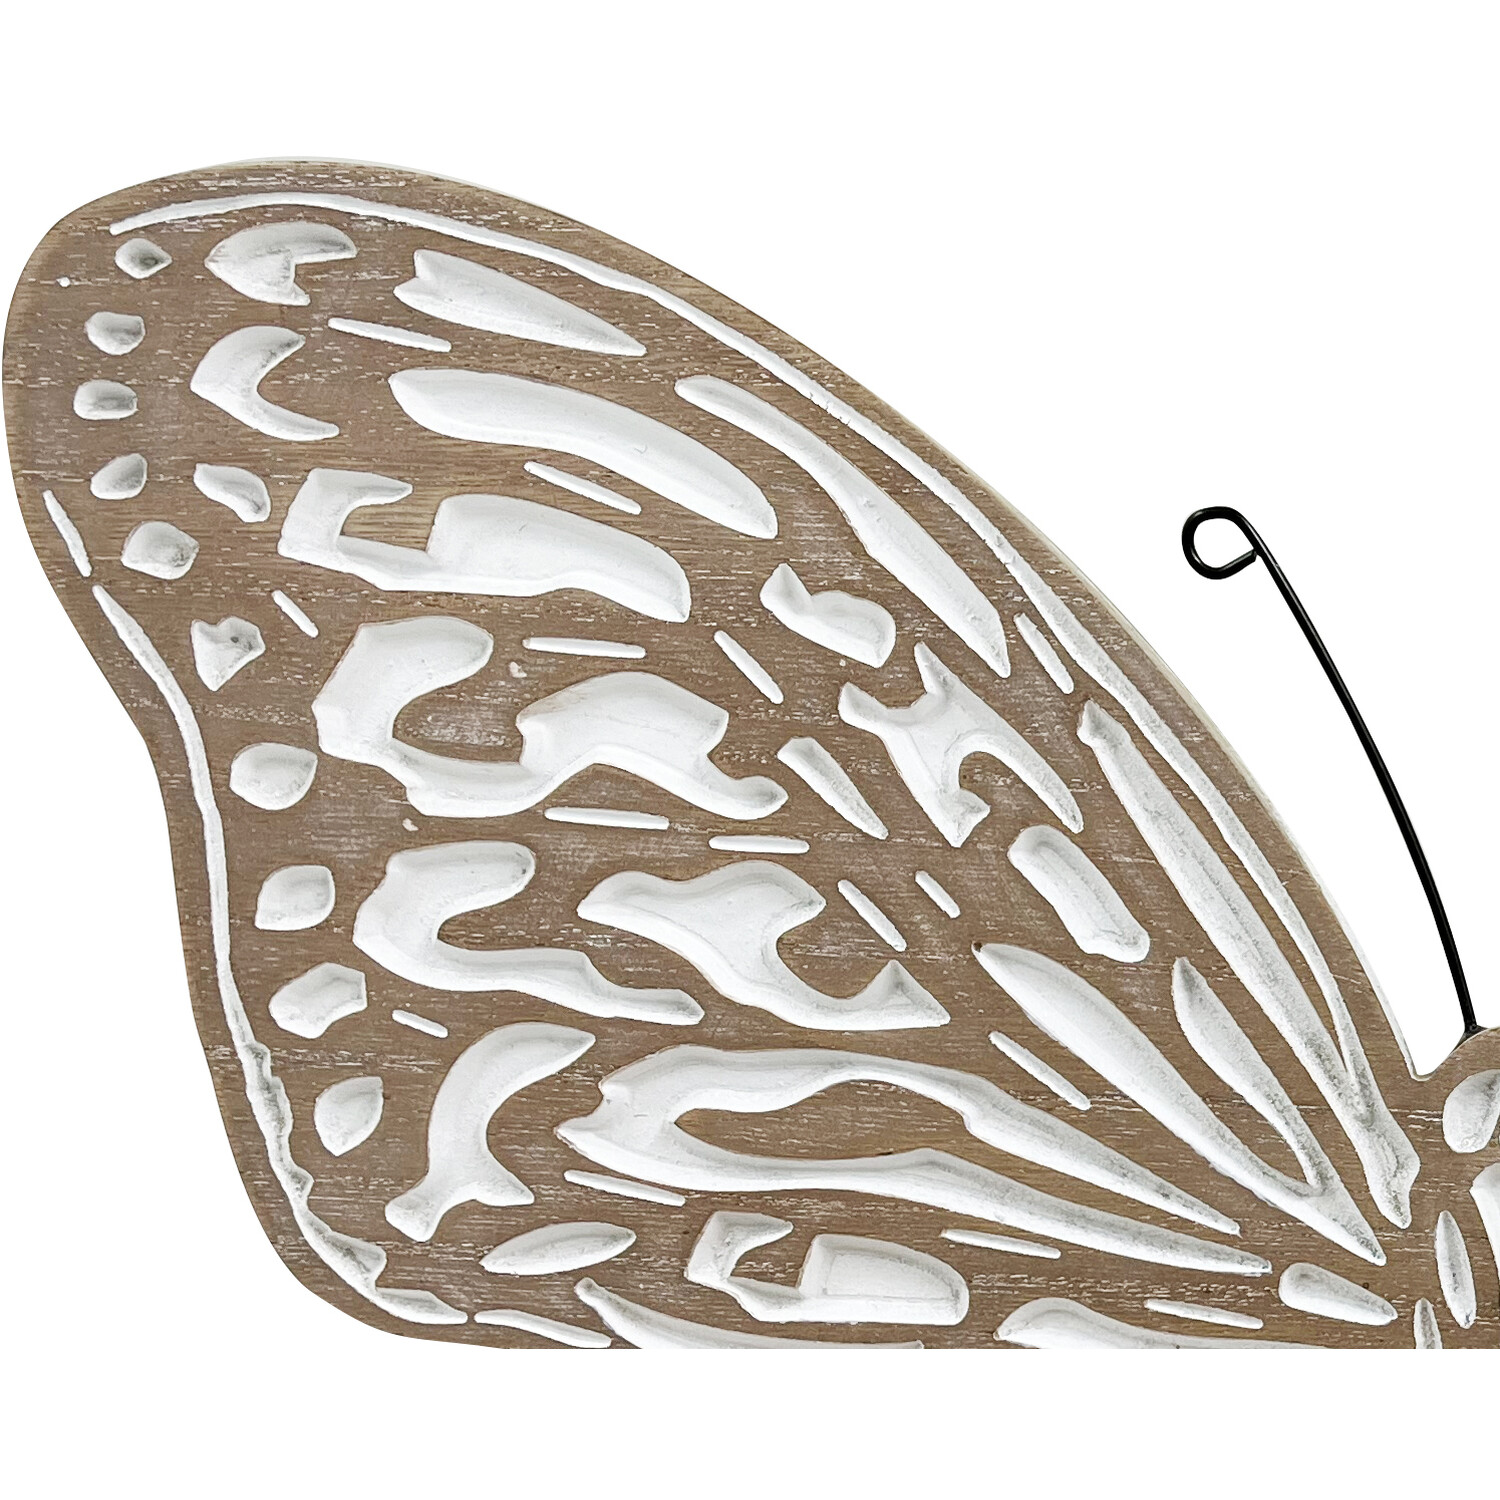 Wood Effect Butterfly Shelf - Brown Image 3